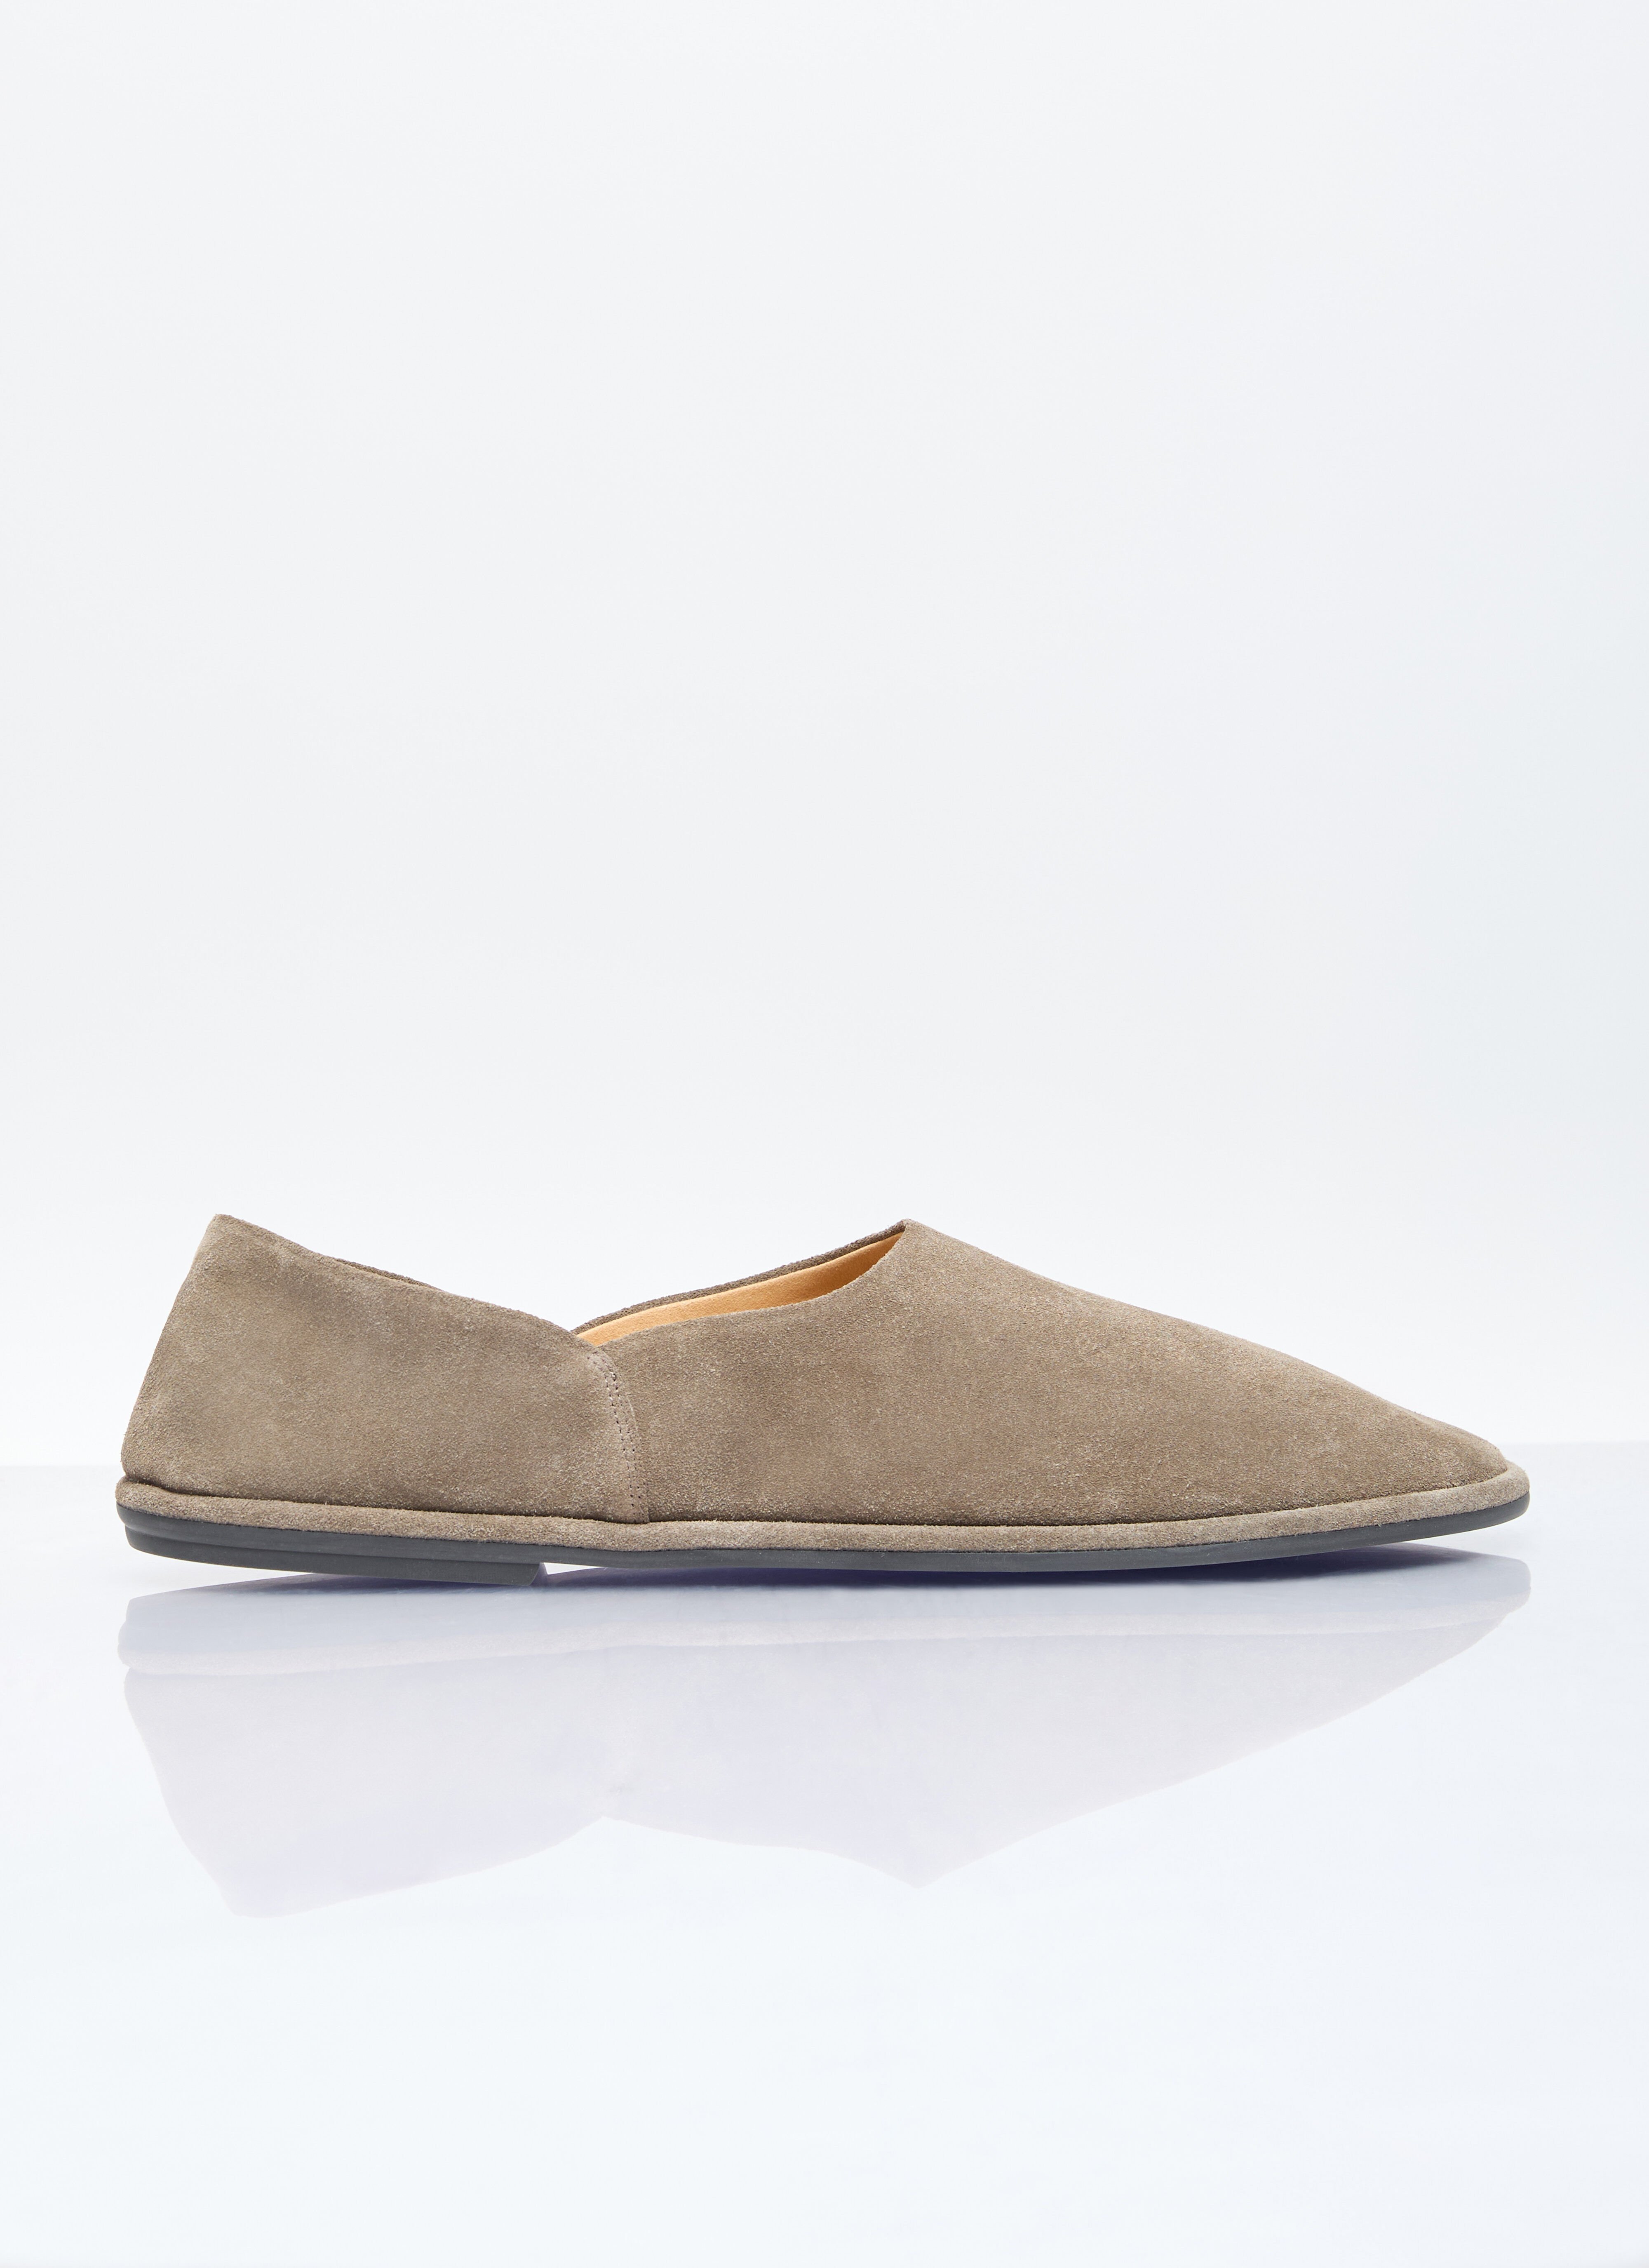 Salomon Canal Slip On Shoes Grey sal0356021